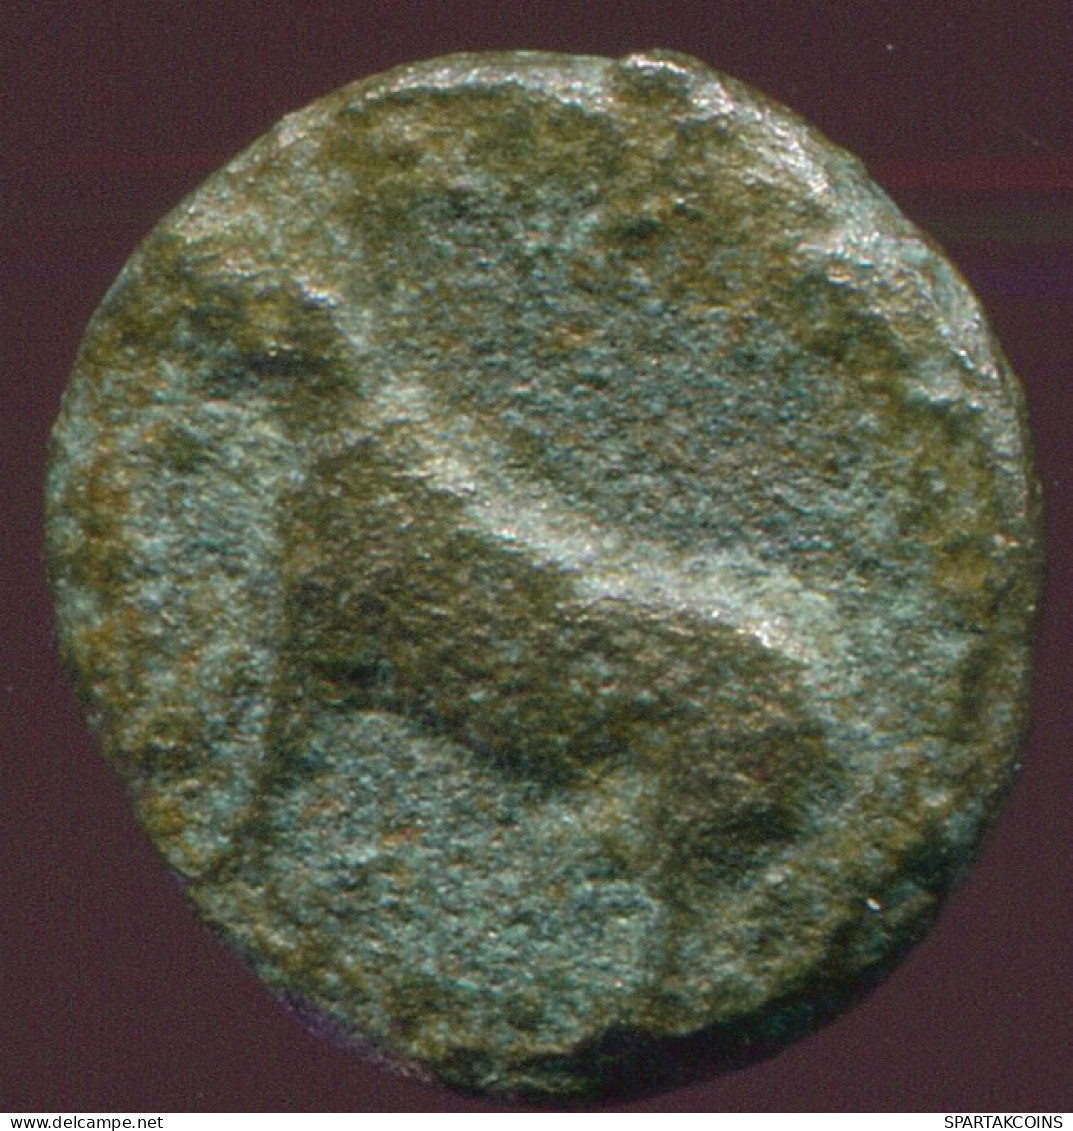 ATHENA Authentic Ancient GRIECHISCHE Münze 1.1g/9.8mm #GRK1352.10.D.A - Greche